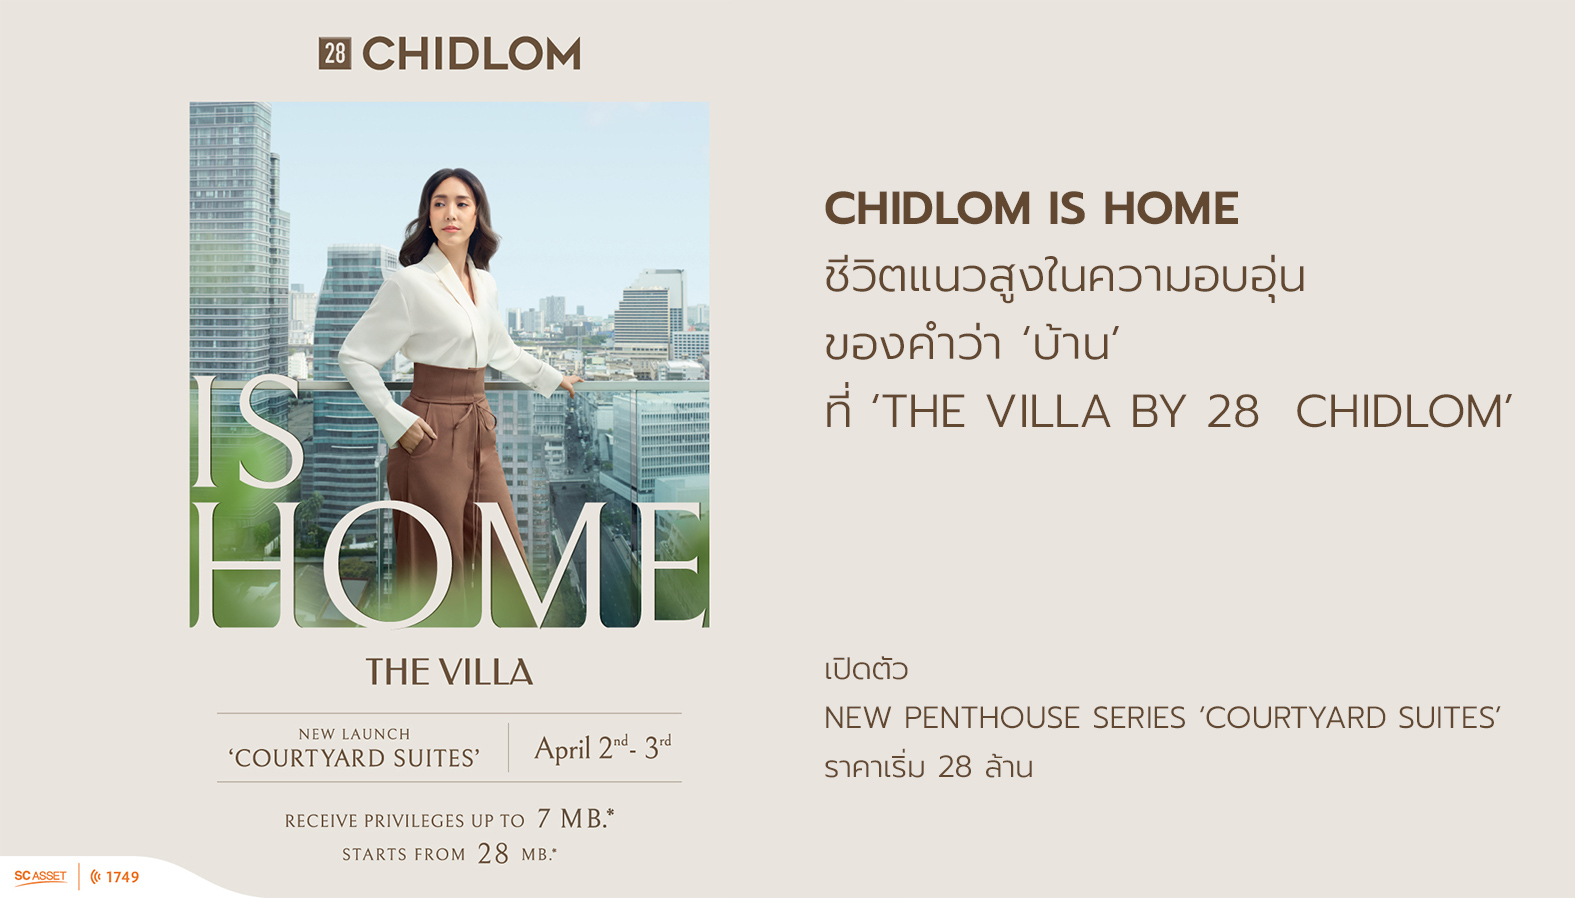 chidlom-is-home’-ชีวิตแนวสูงในความอบอุ่นของคำว่า-‘บ้าน’-ที่-‘the-villa-by-28-chidlom’-เปิดตัว-new-penthouse-series-‘courtyard-suites’-ราคาเริ่ม-28-ล้าน